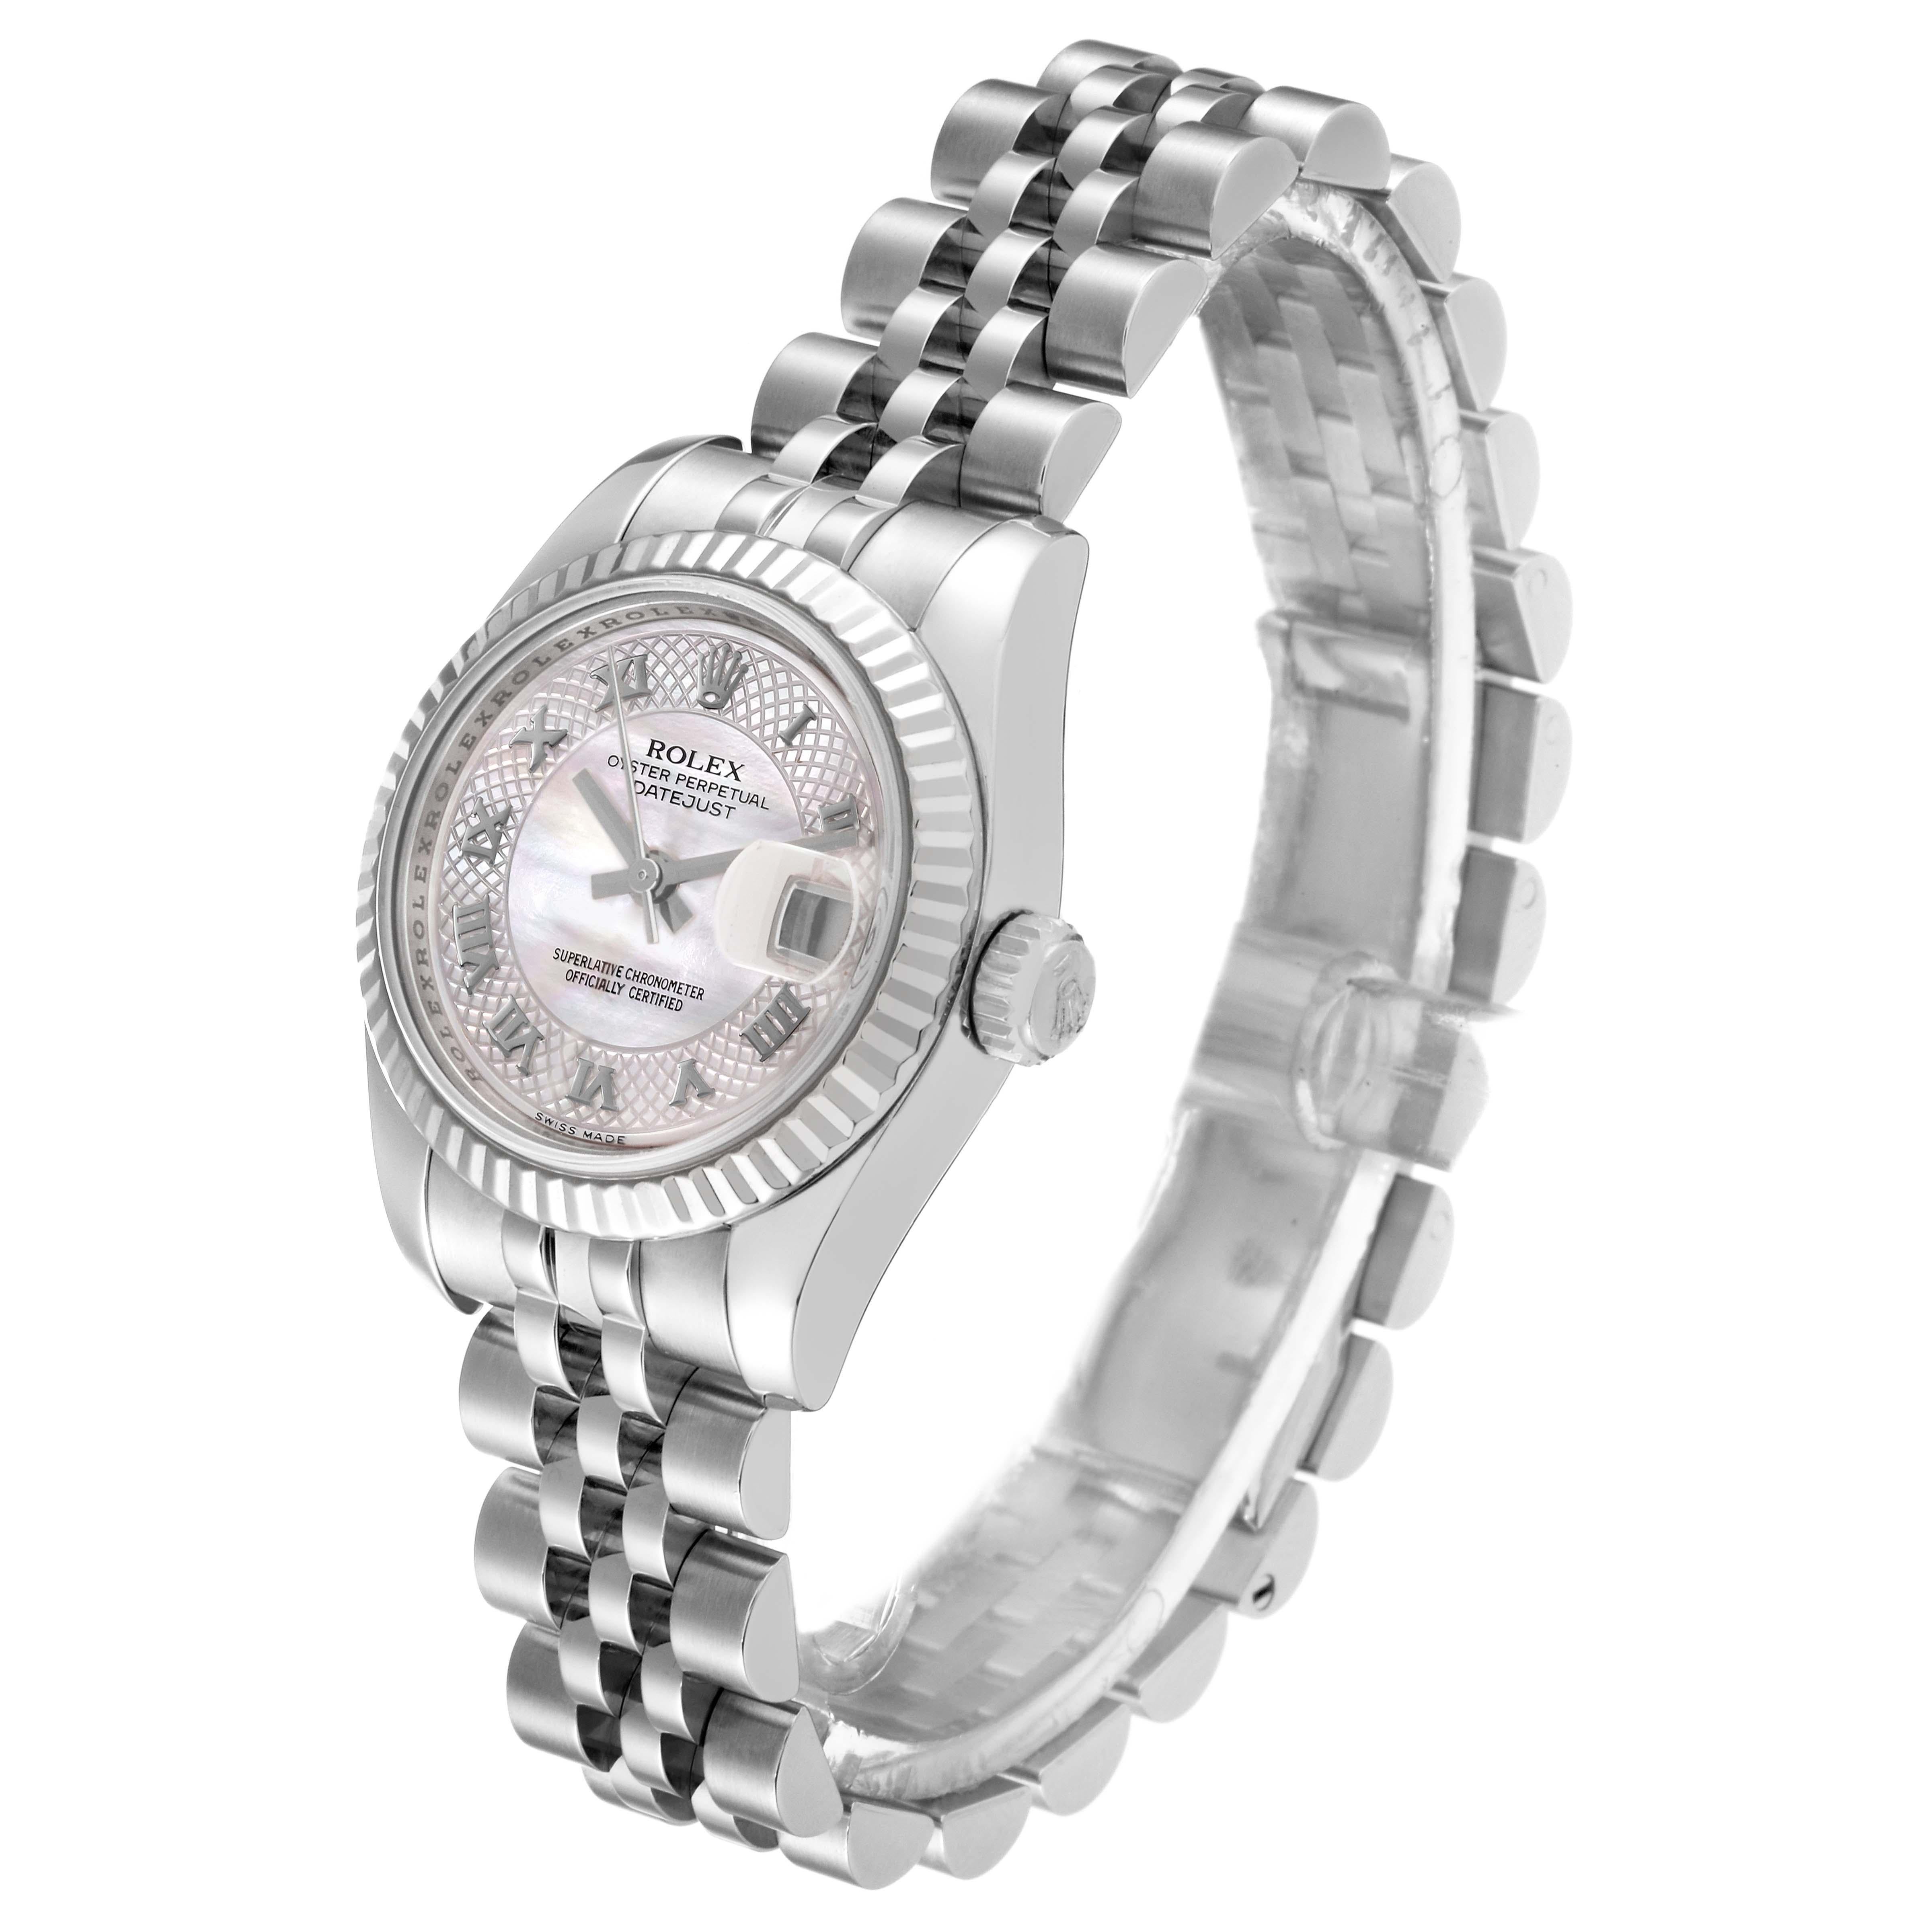 Women's Rolex Datejust Steel White Gold Decorated MOP Ladies Watch 179174 Box Card